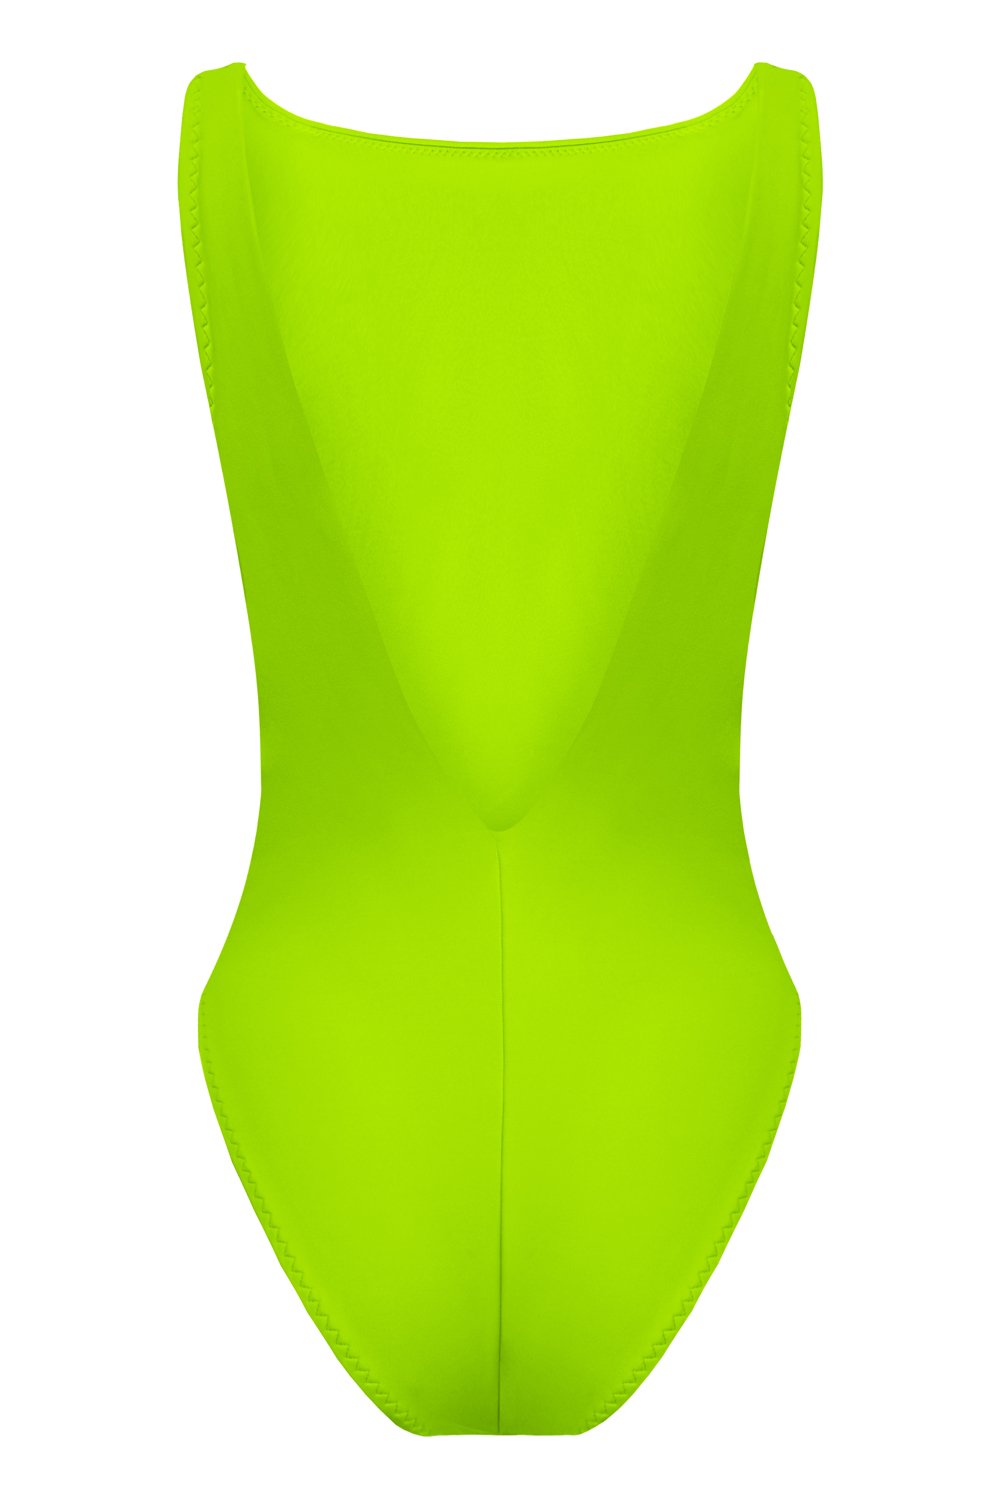 Vertex Greenery swimsuit